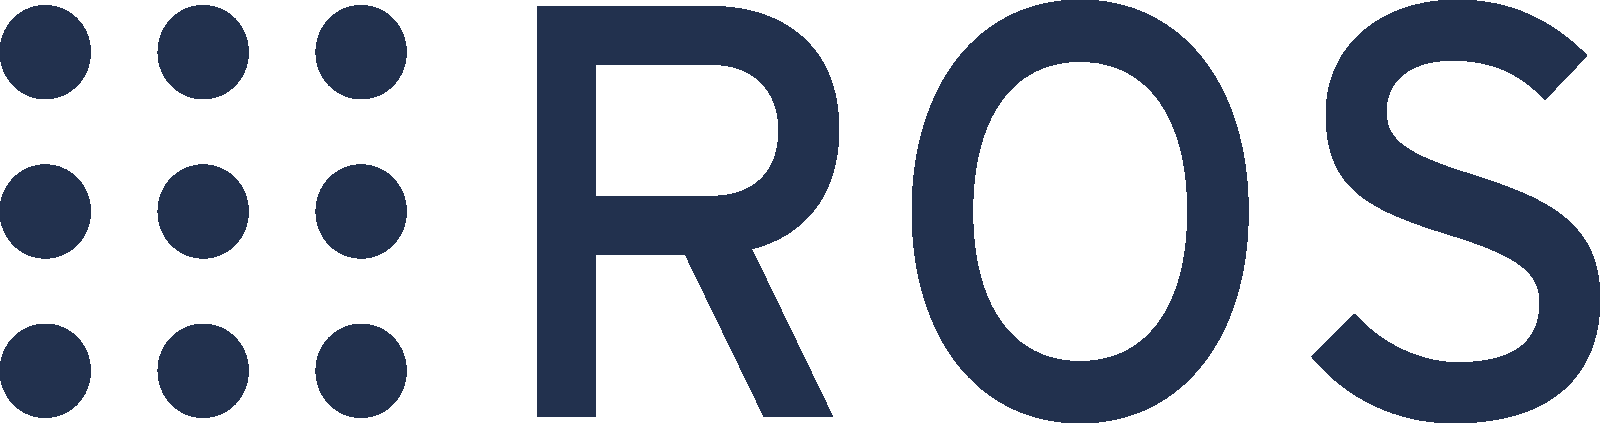 ros logo